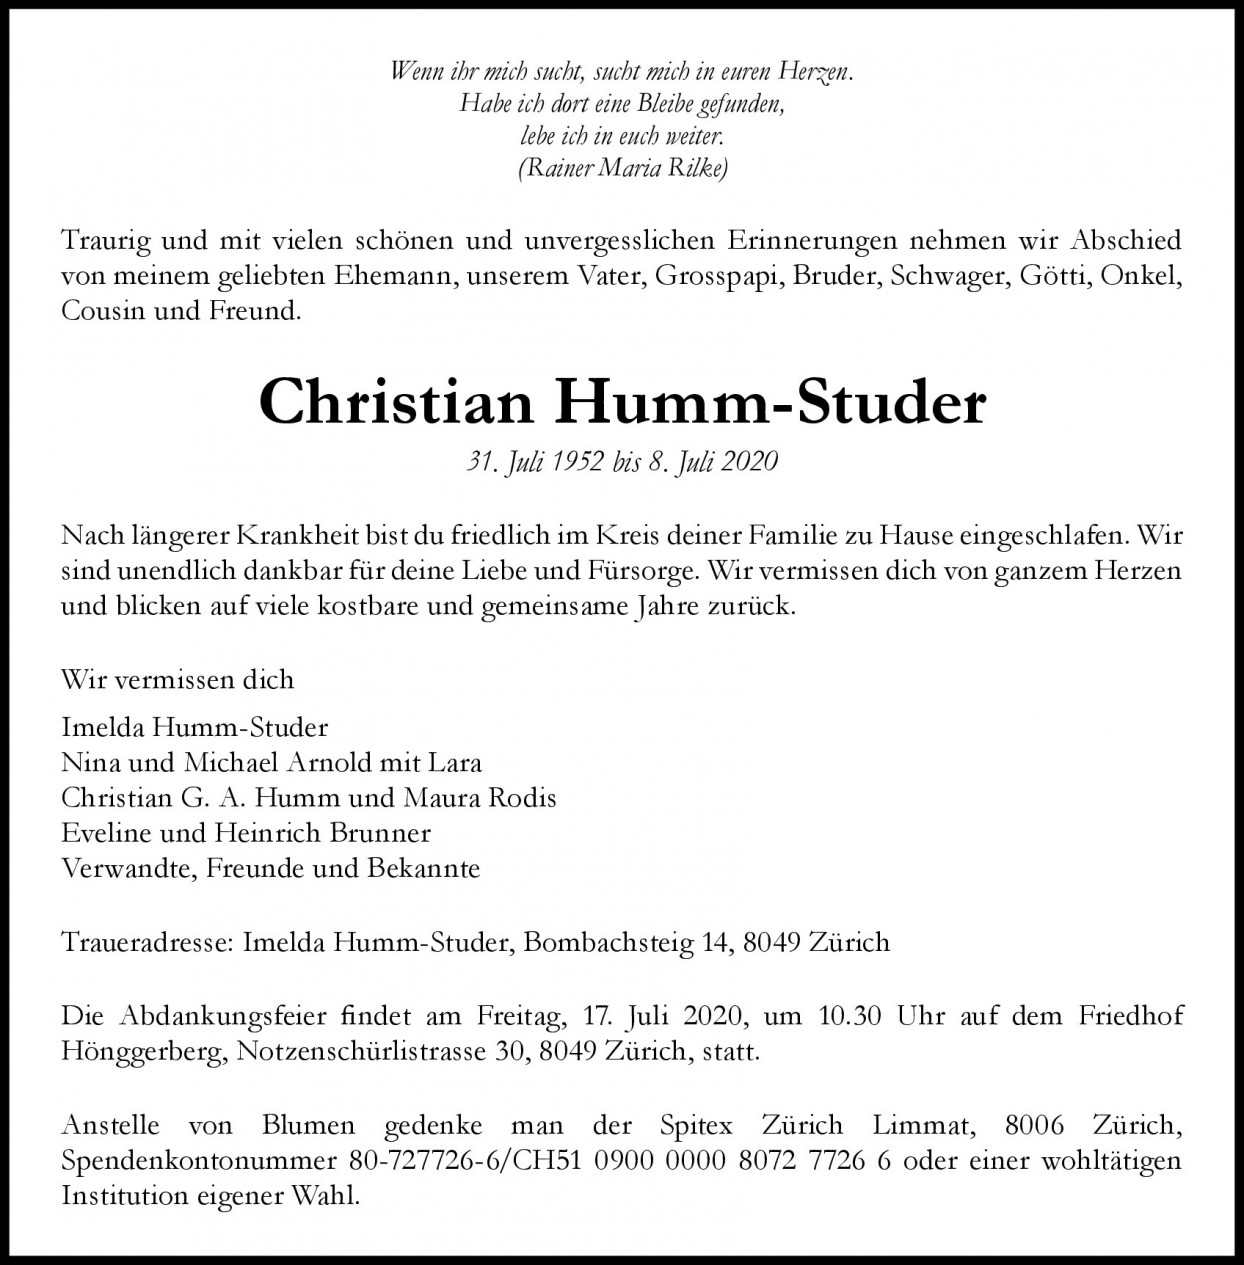 Christian Humm-Studer